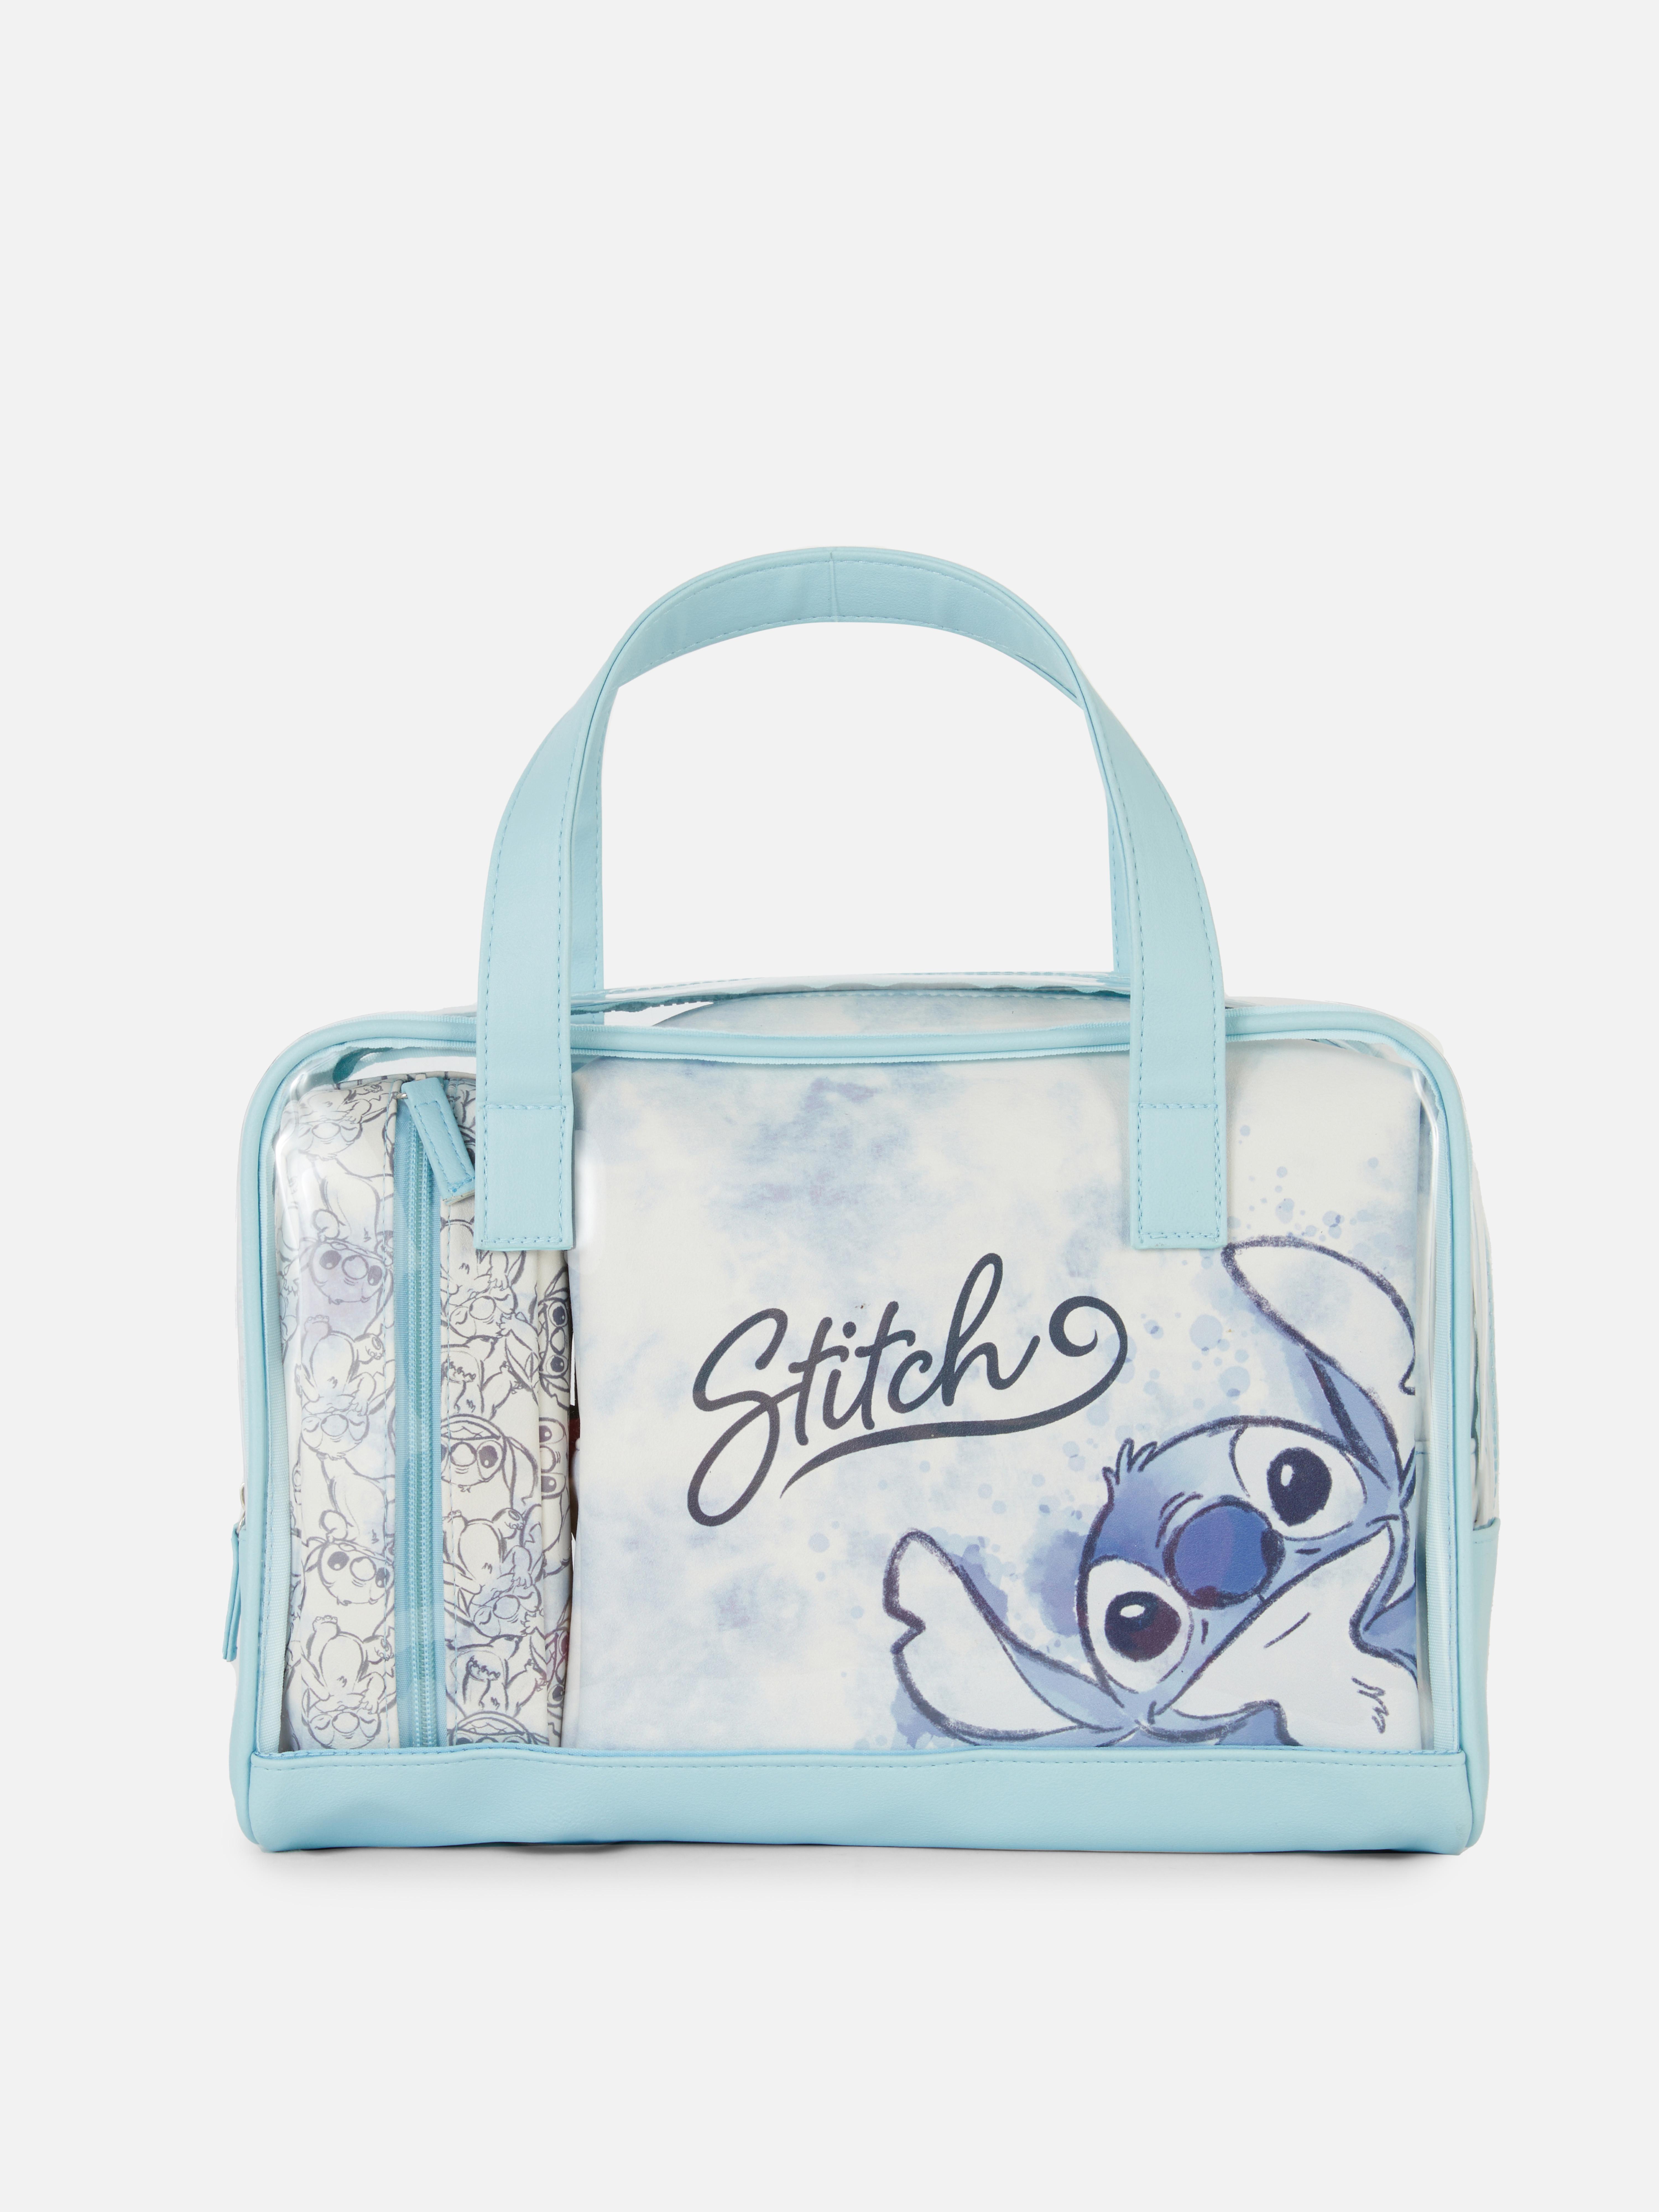 Disney's Lilo & Stitch Vanity Case Set